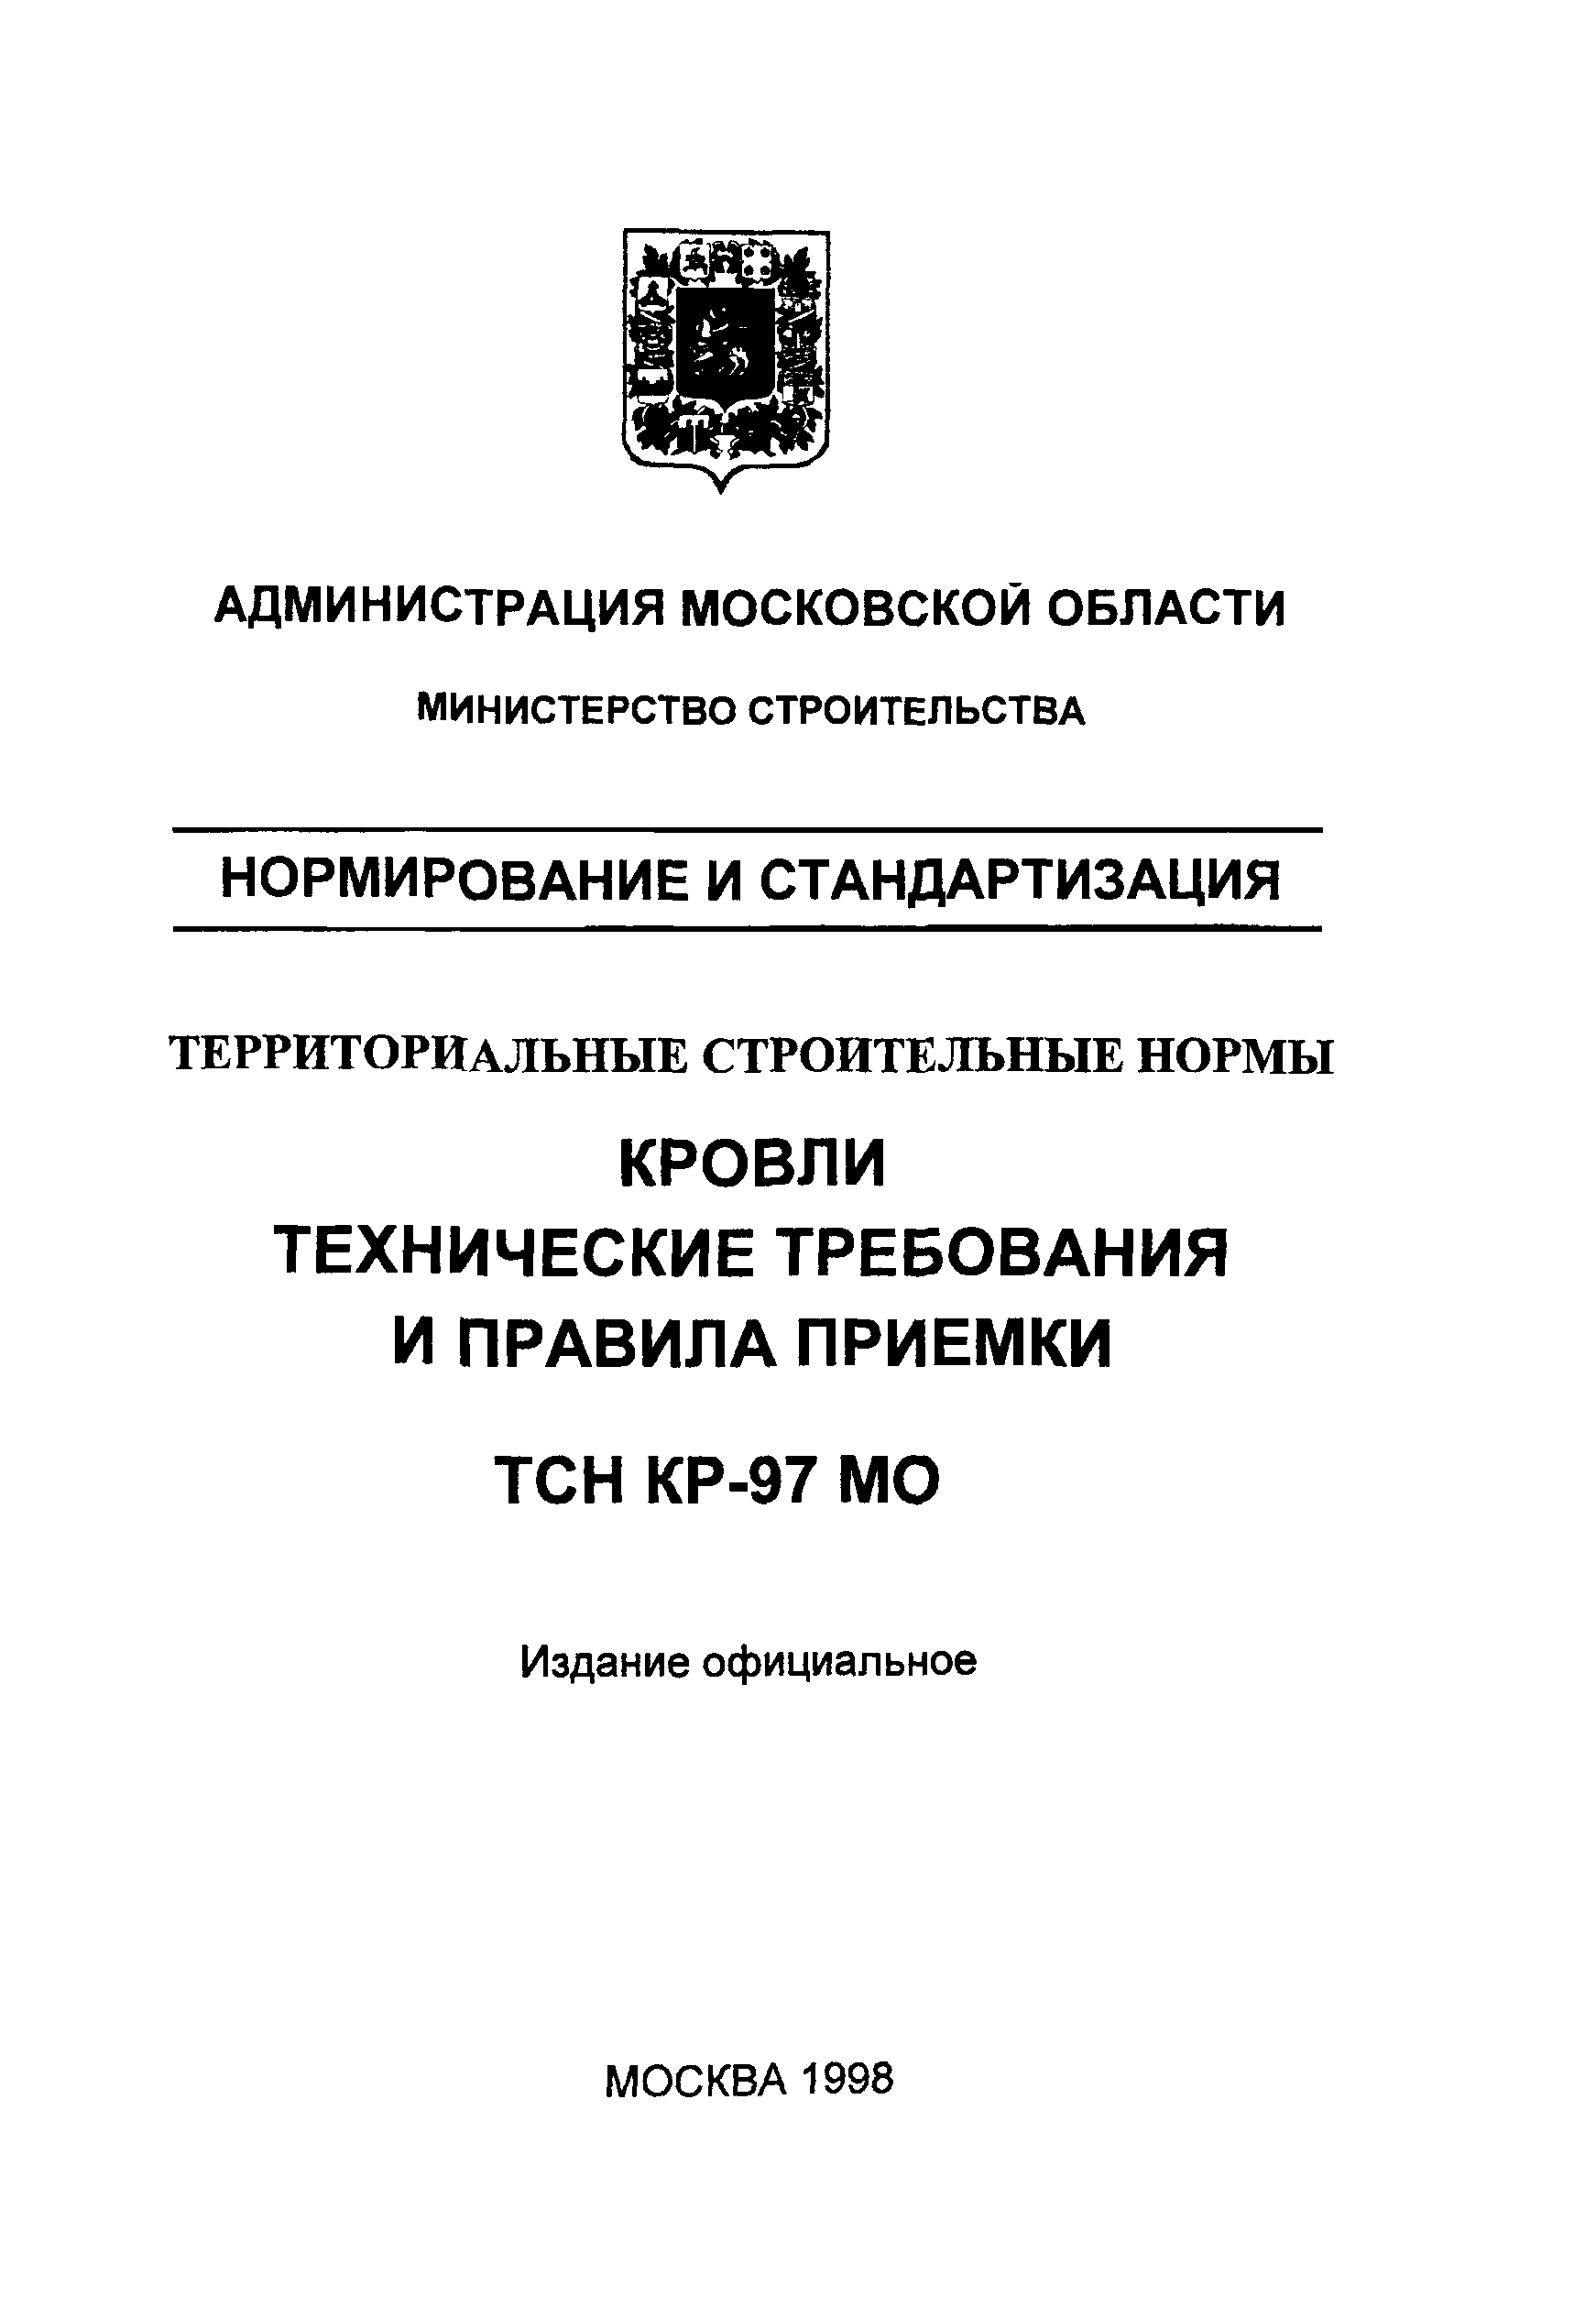 ТСН КР-97 МО